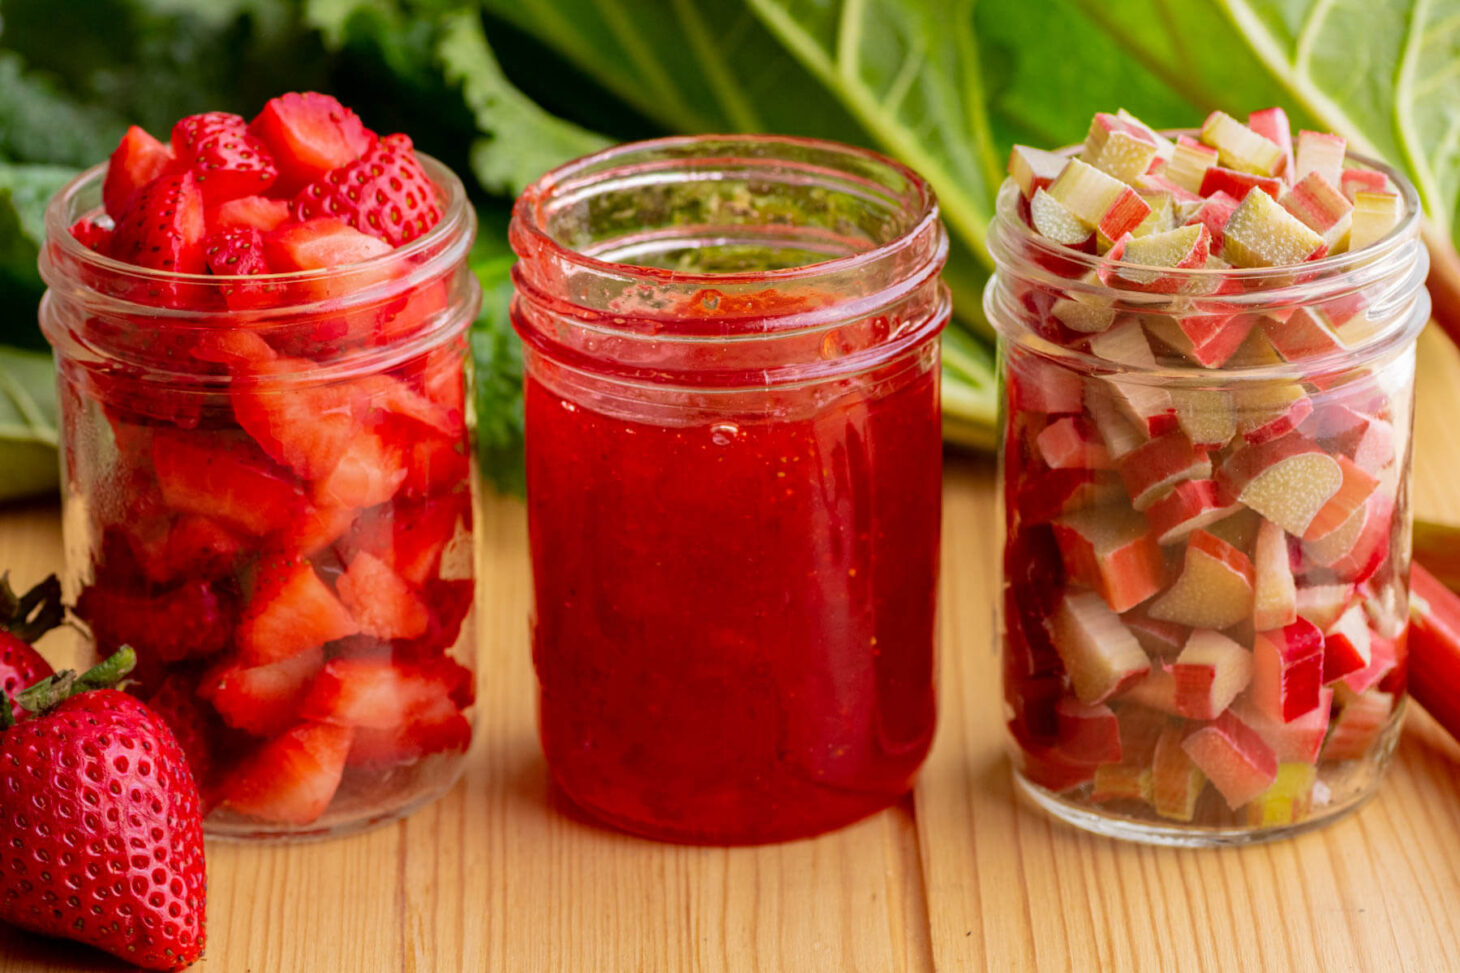 Three glass jars containing chopped strawberries, chopped rhubarb and strawberry rhubarb jam.